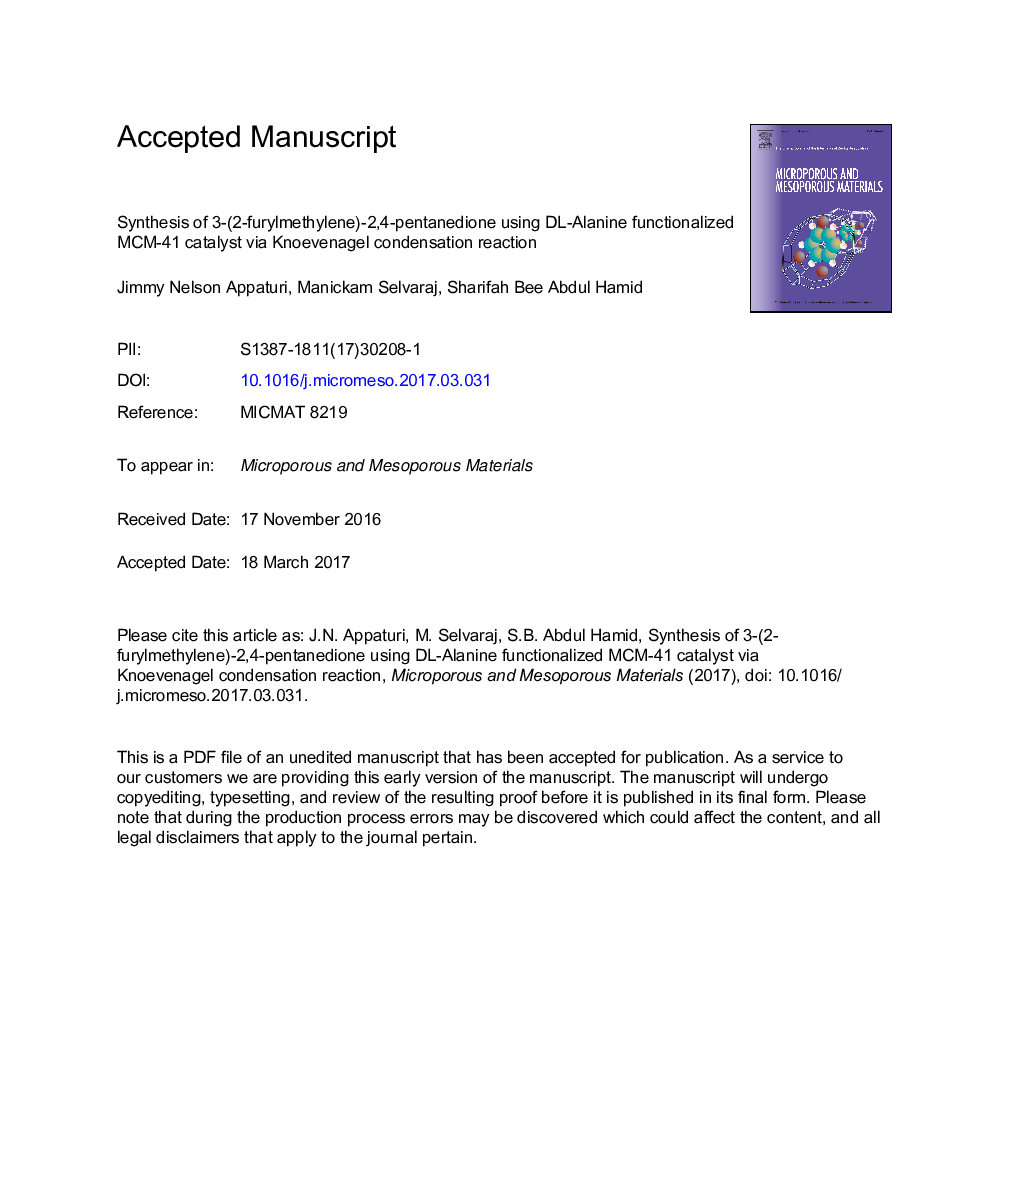 Synthesis of 3-(2-furylmethylene)-2,4-pentanedione using DL-Alanine functionalized MCM-41 catalyst via Knoevenagel condensation reaction